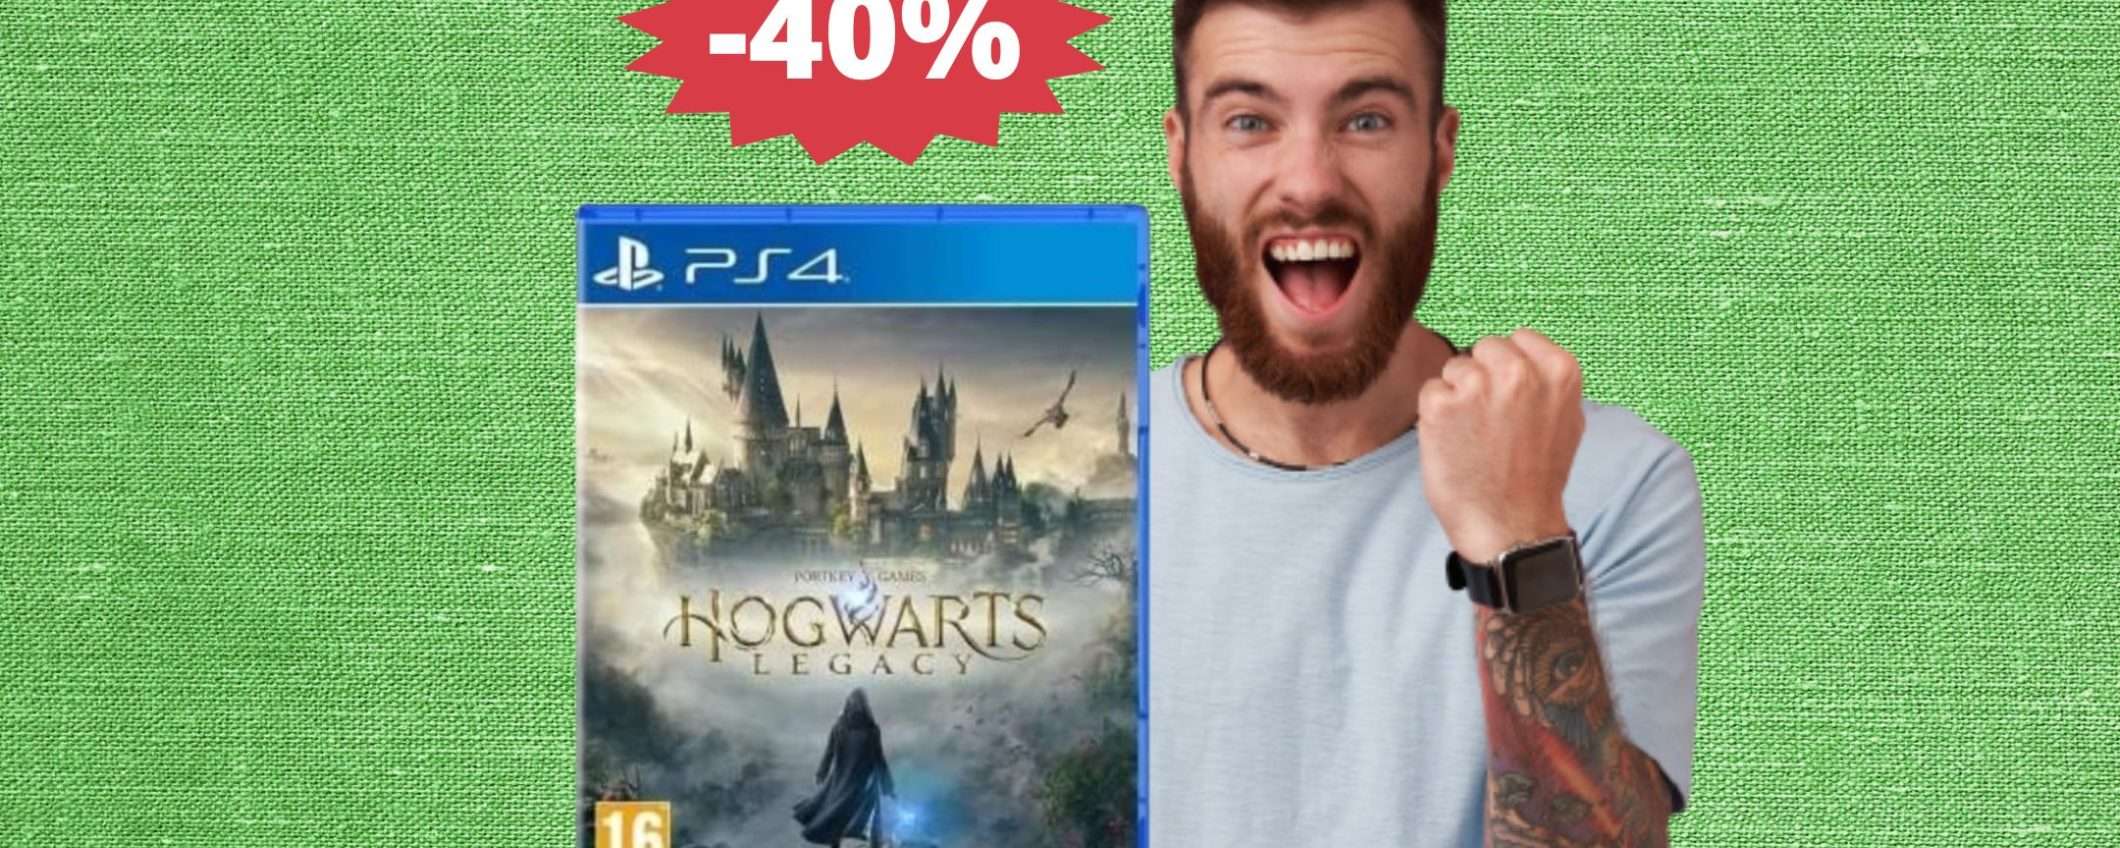 Hogwarts Legacy per PS4: sconto IMBATTIBILE del 40%